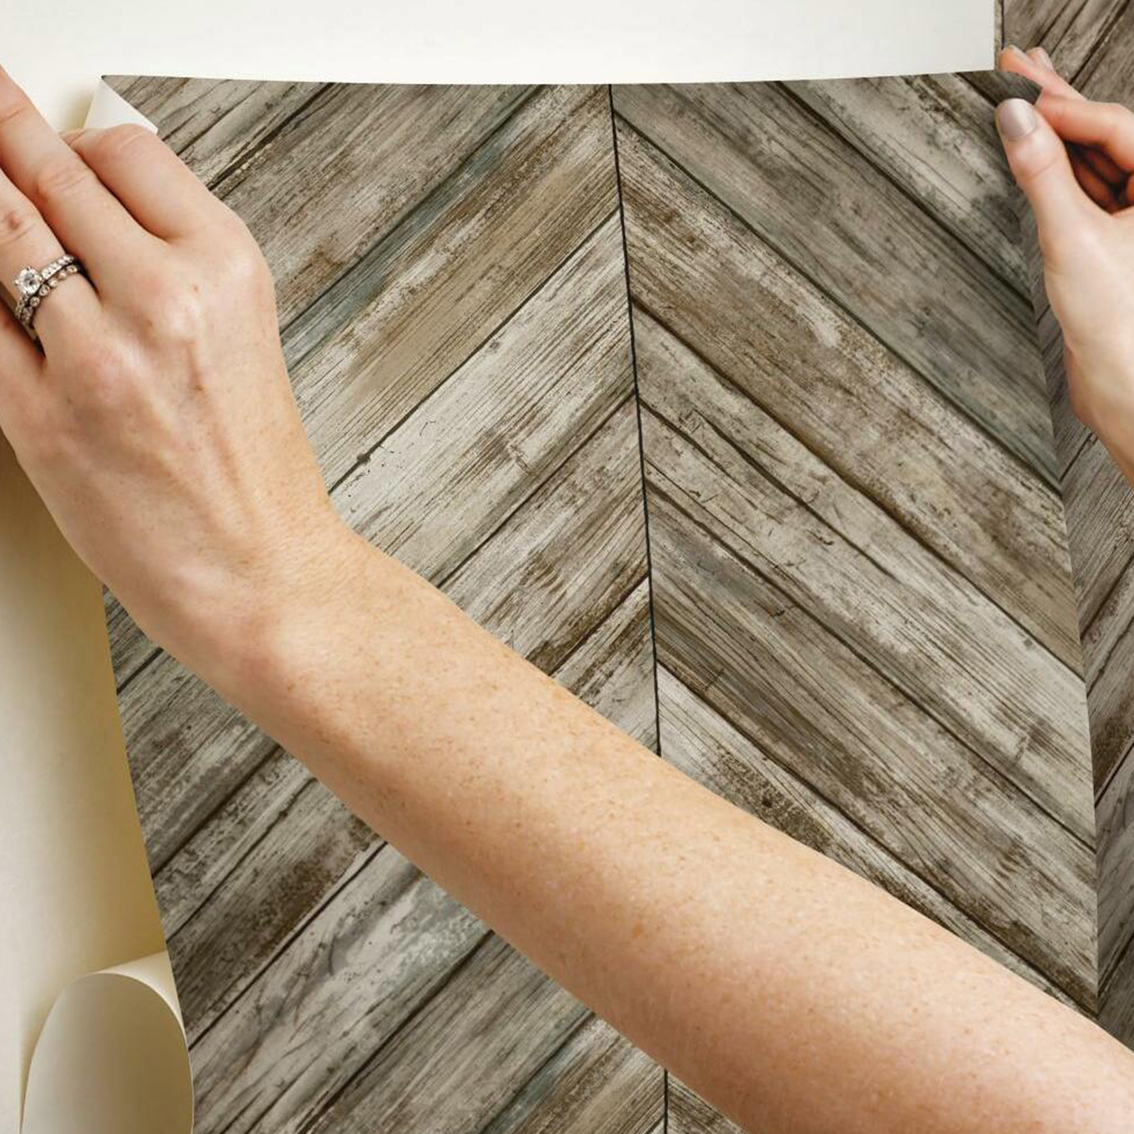 RoomMates Herring Bone Wood Boards Peel and Stick Wallpaper - Image 3 of 8